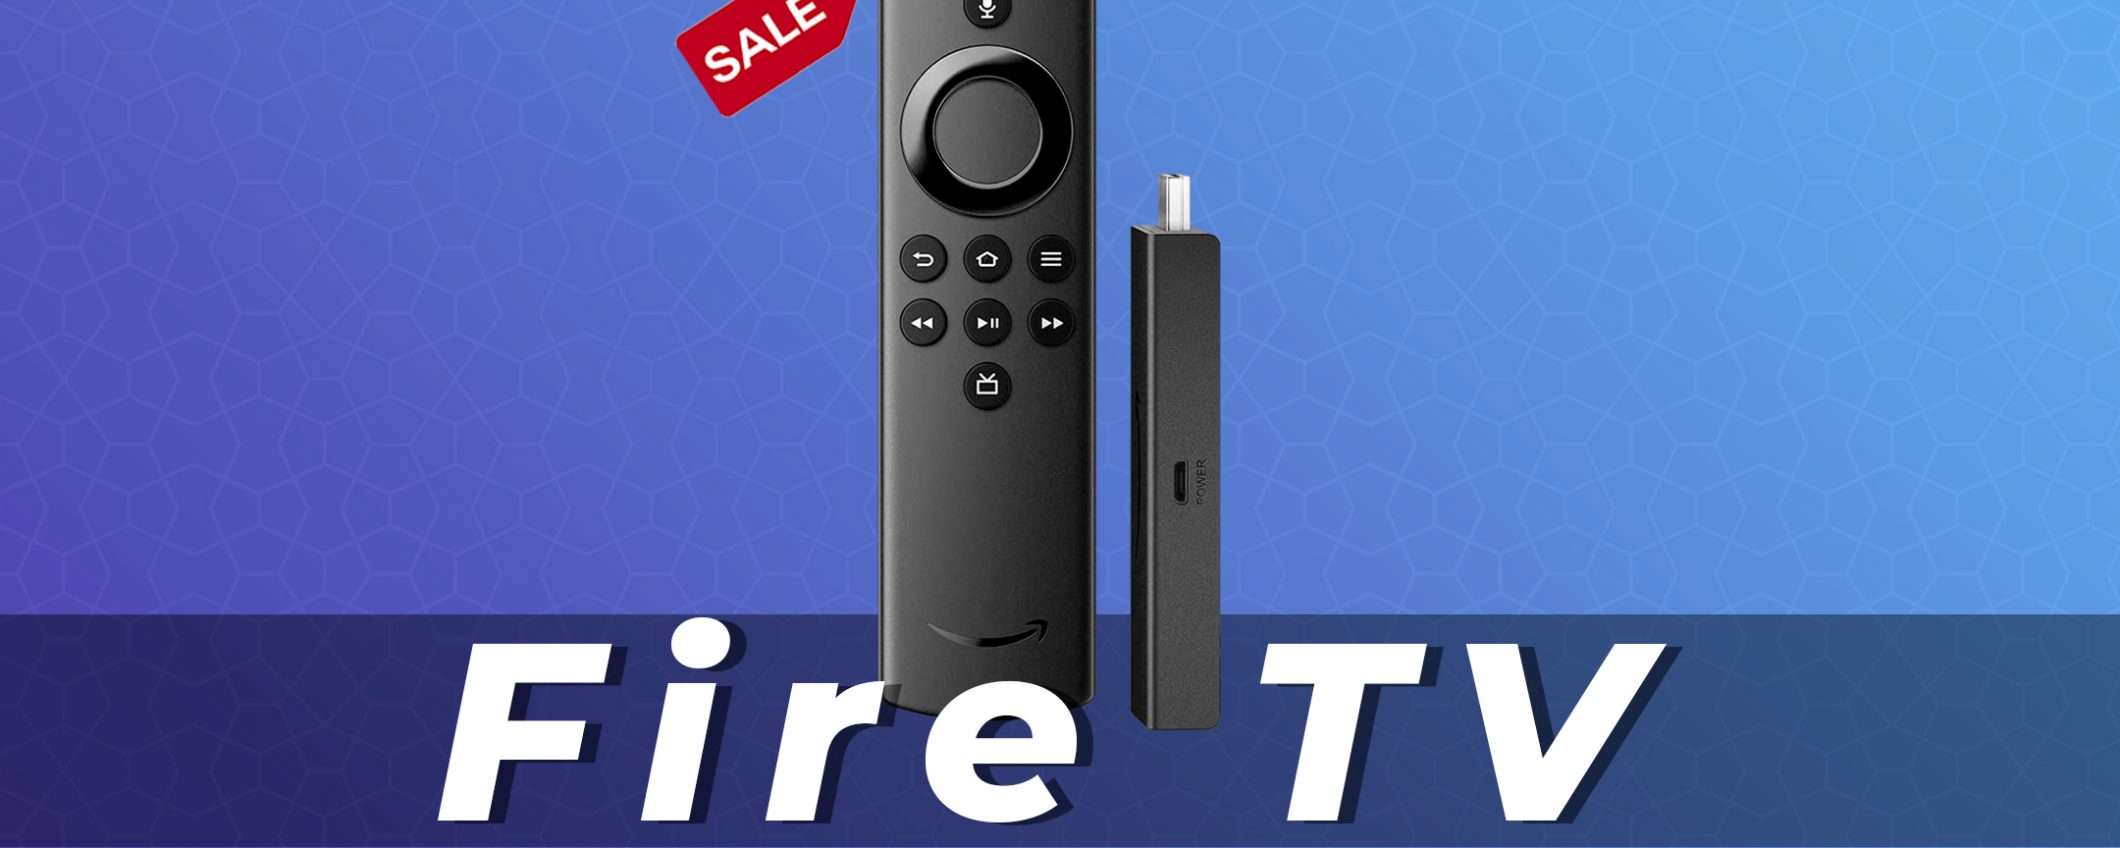 Fire TV Stick: la tua TV diventa smart a soli 19,99€